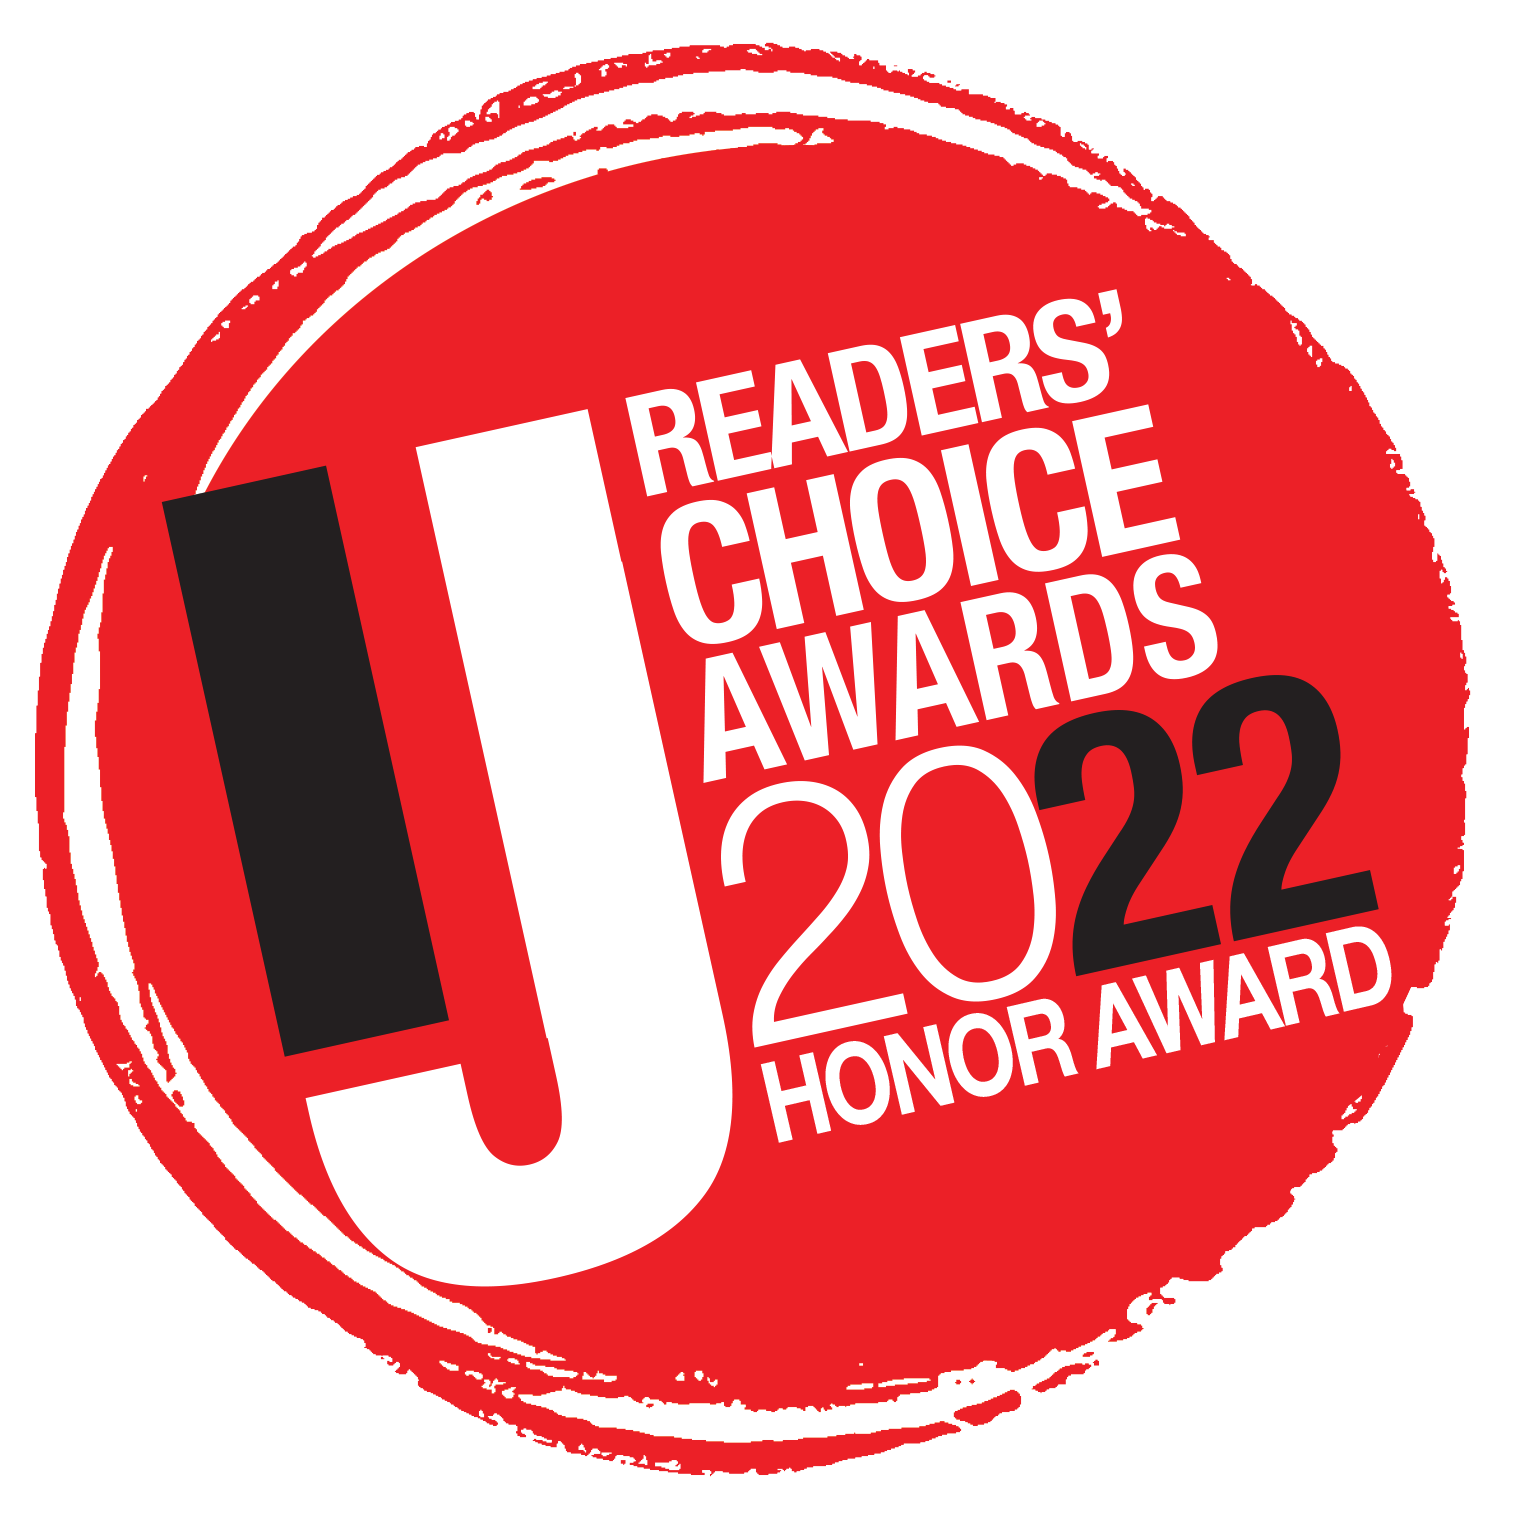 The readers choice award logo design